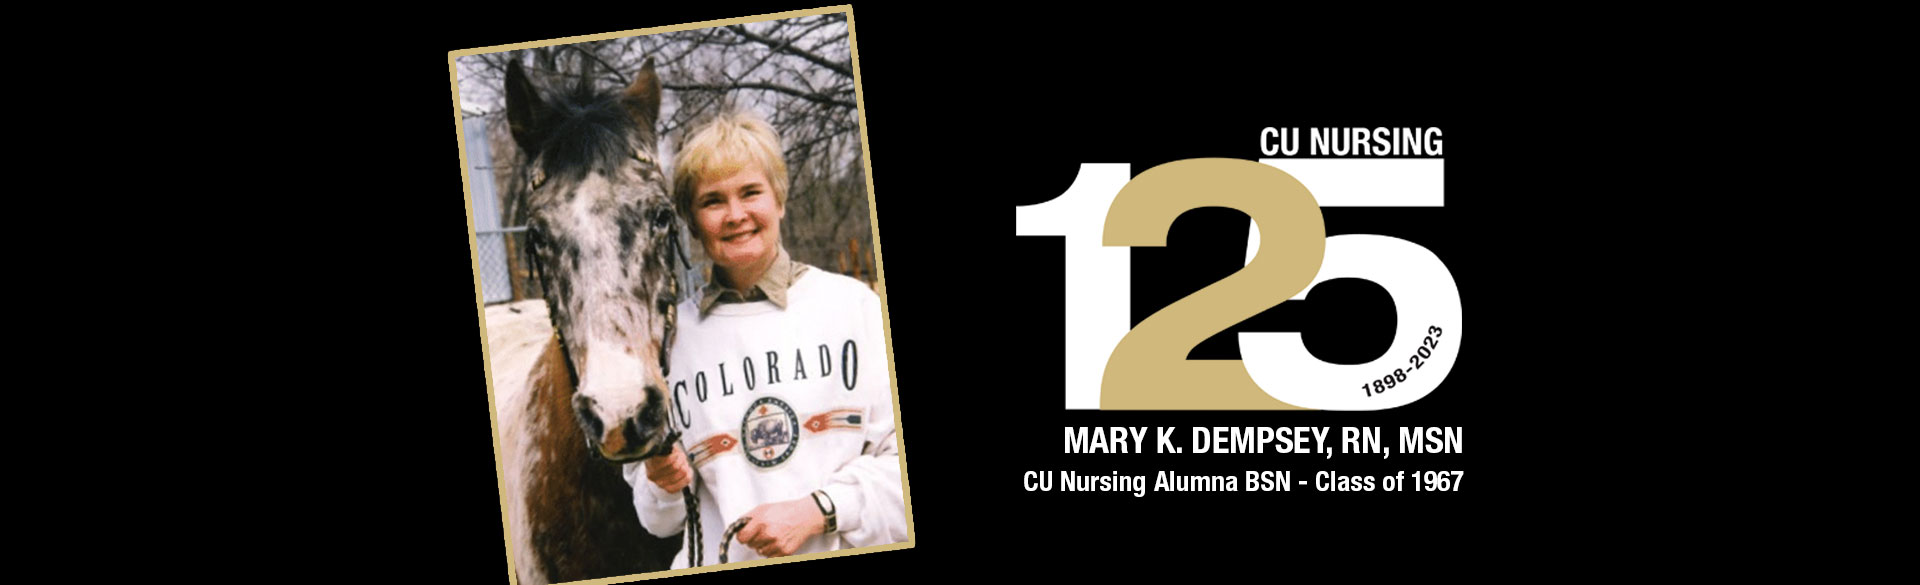 CU Nursing Alumna Mary K. Dempsey, RN, MSN (1967)